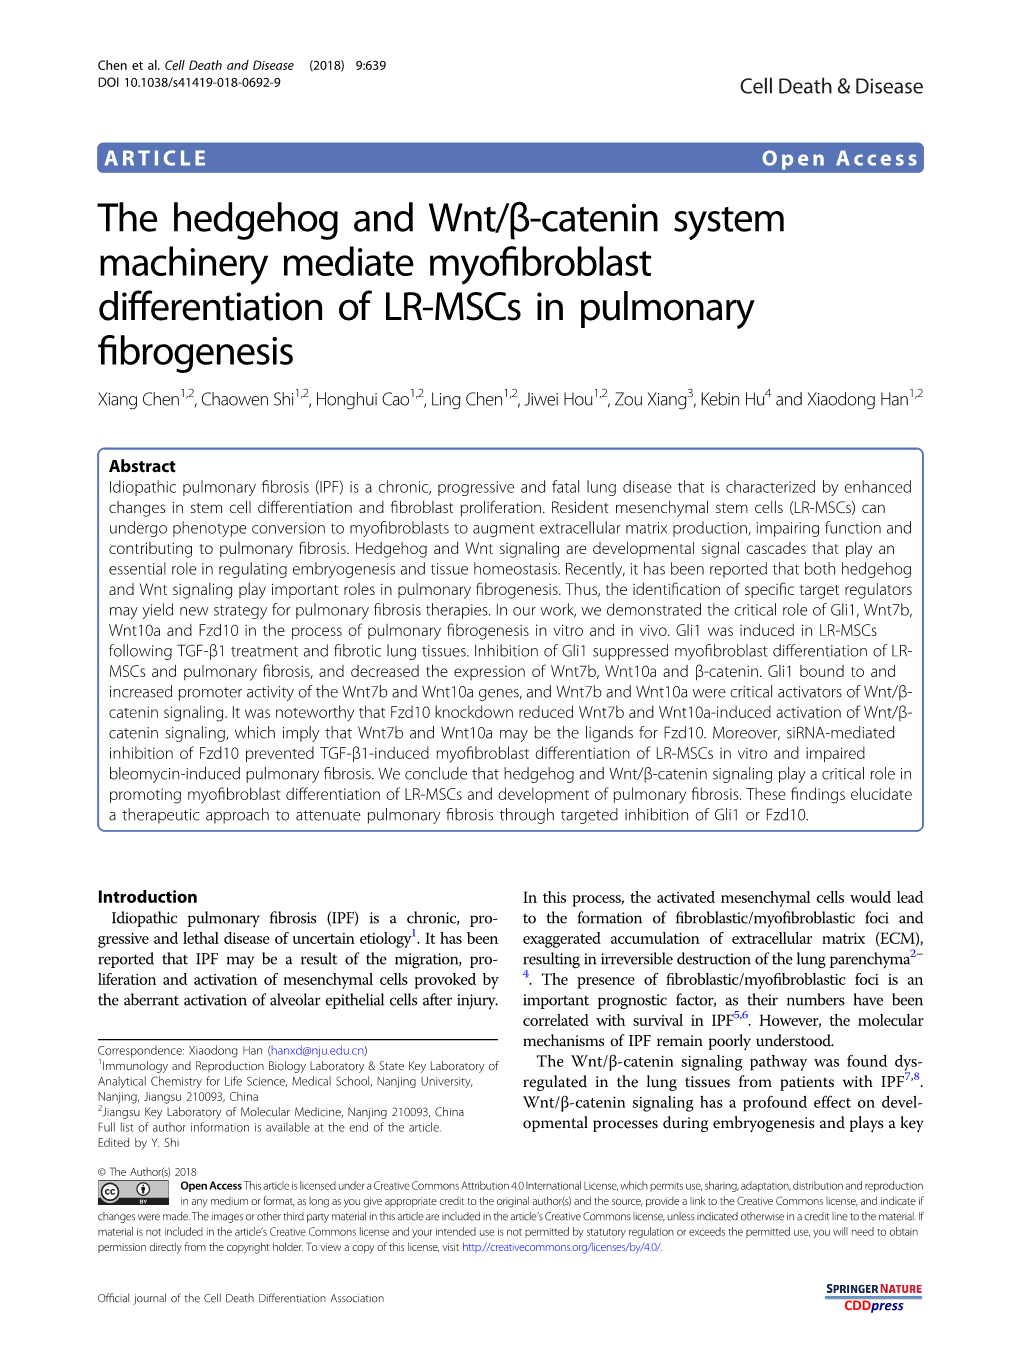 The Hedgehog and Wnt/Î²-Catenin System Machinery Mediate